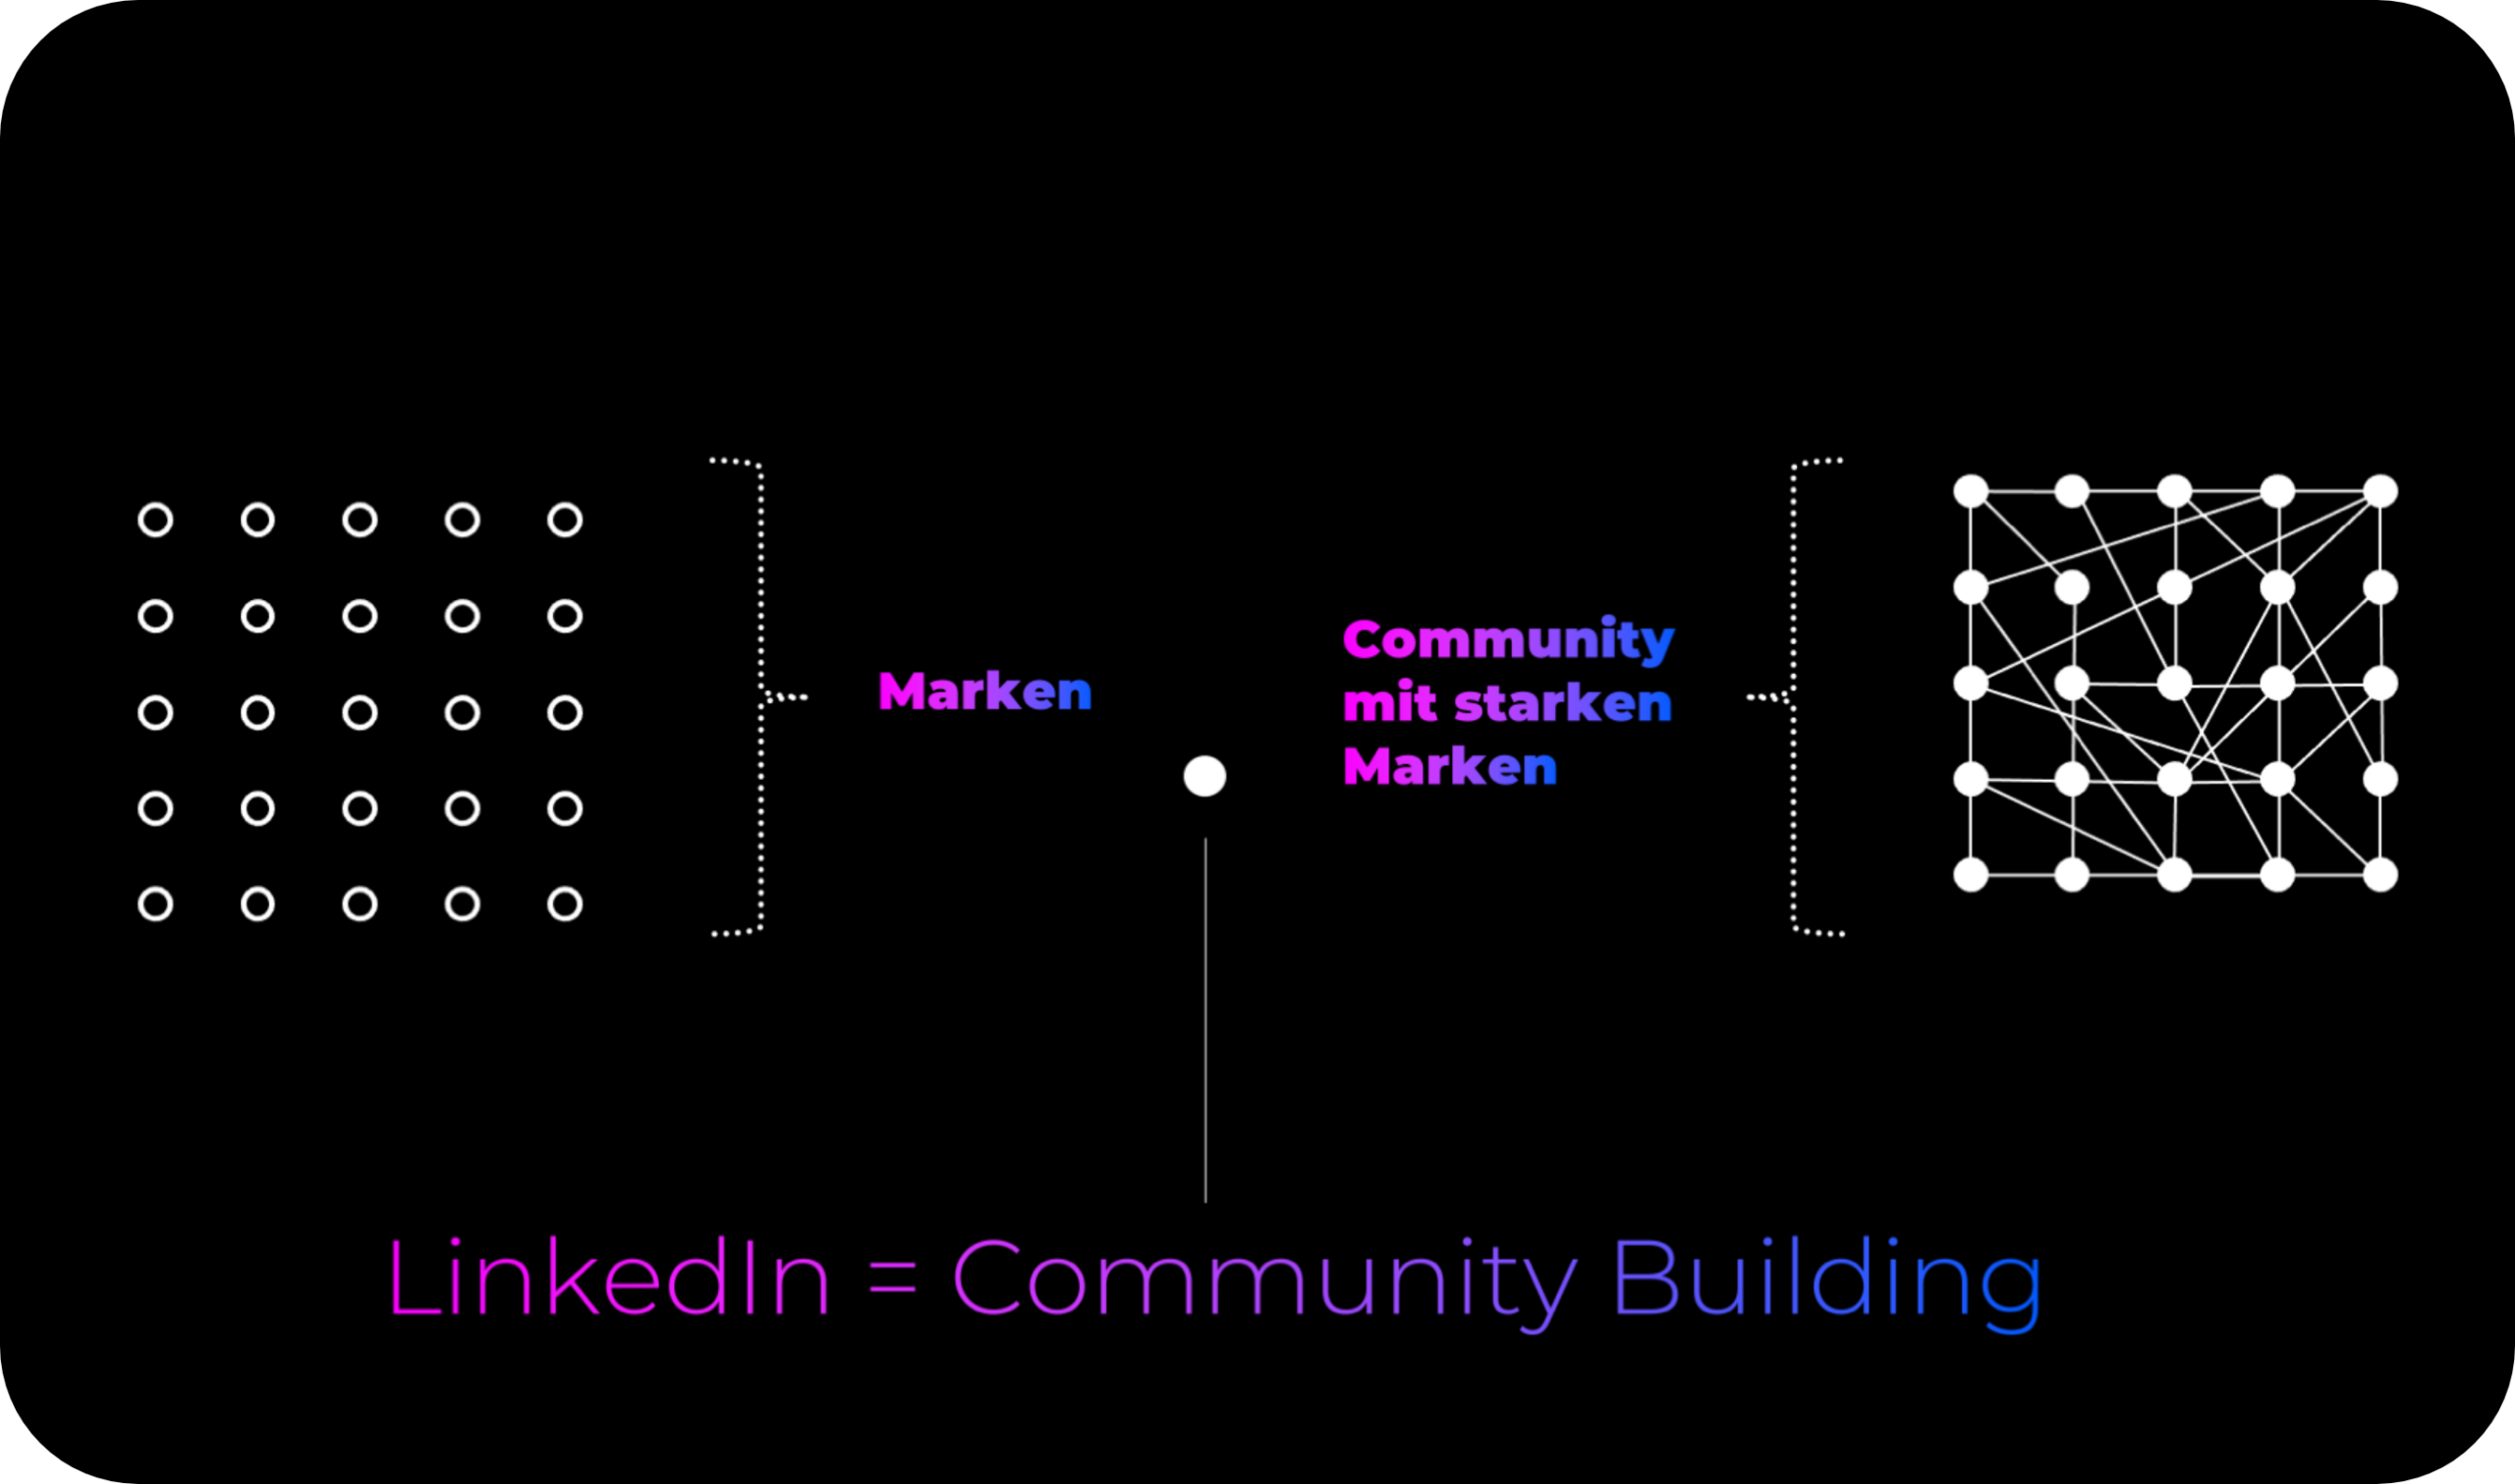 LinkedIn bedeutet Communitybuilding